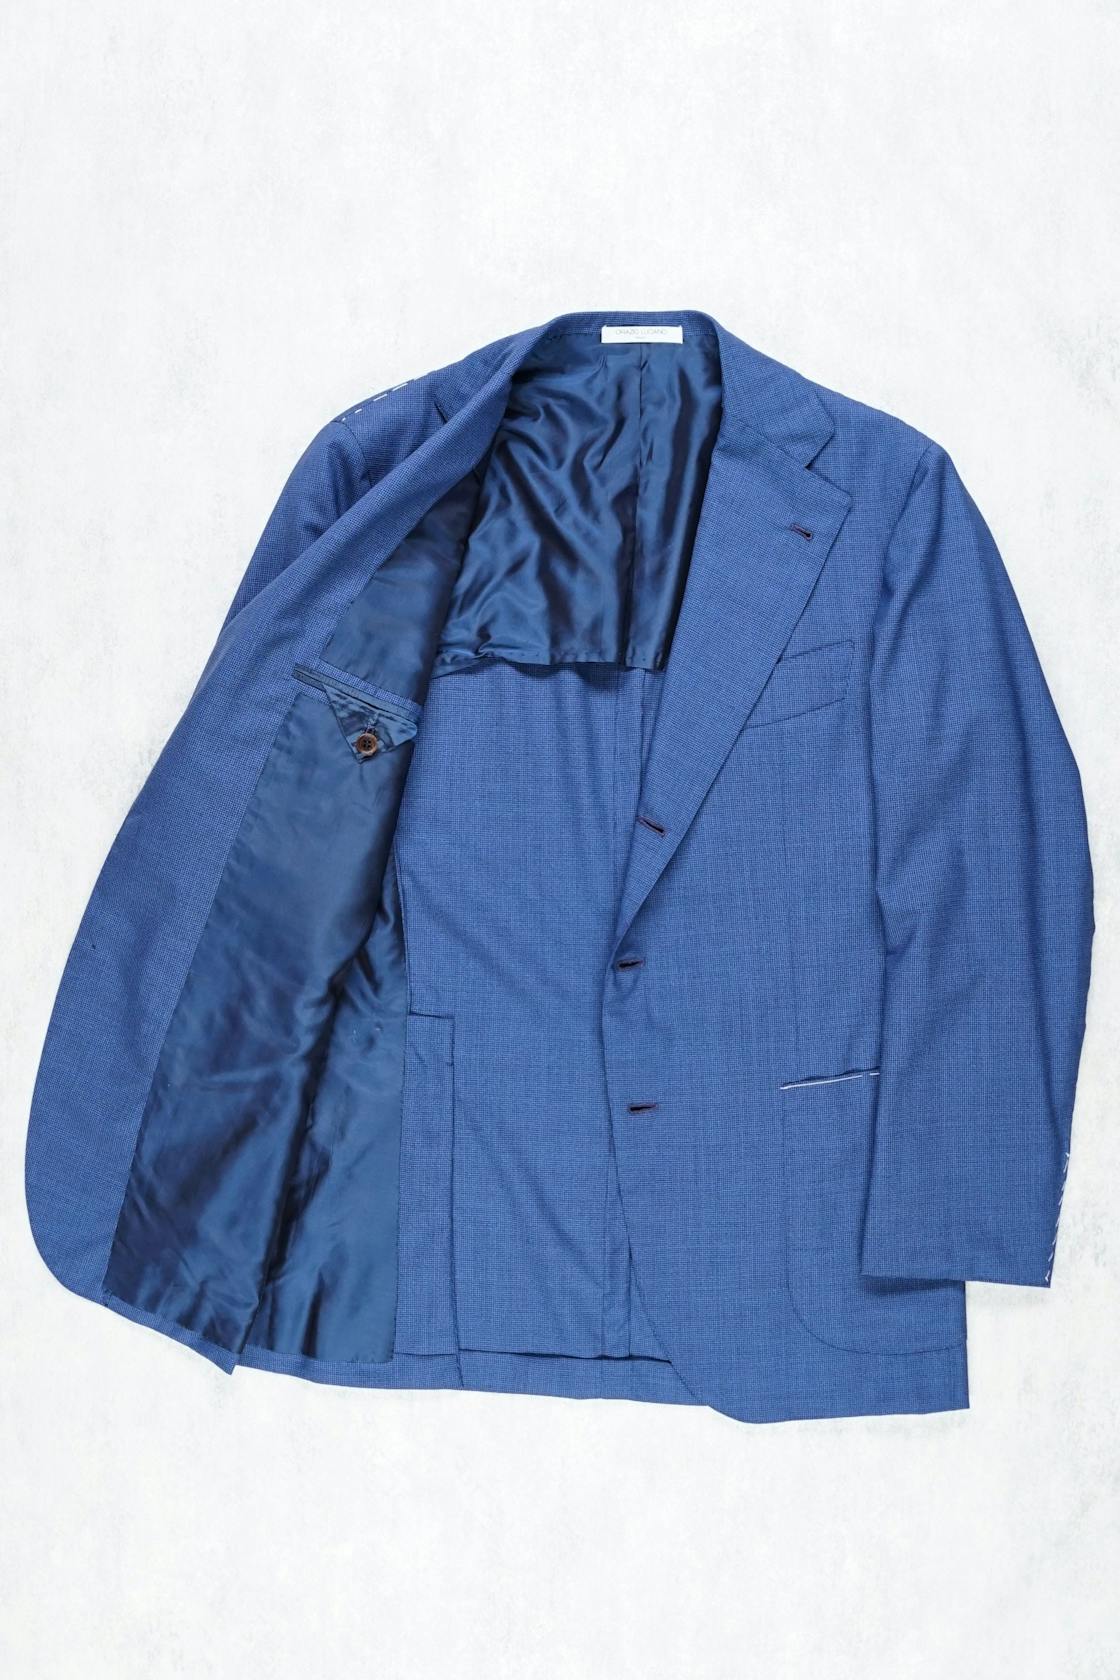 Orazio Luciano Blue Wool Houndstooth Sport Coat